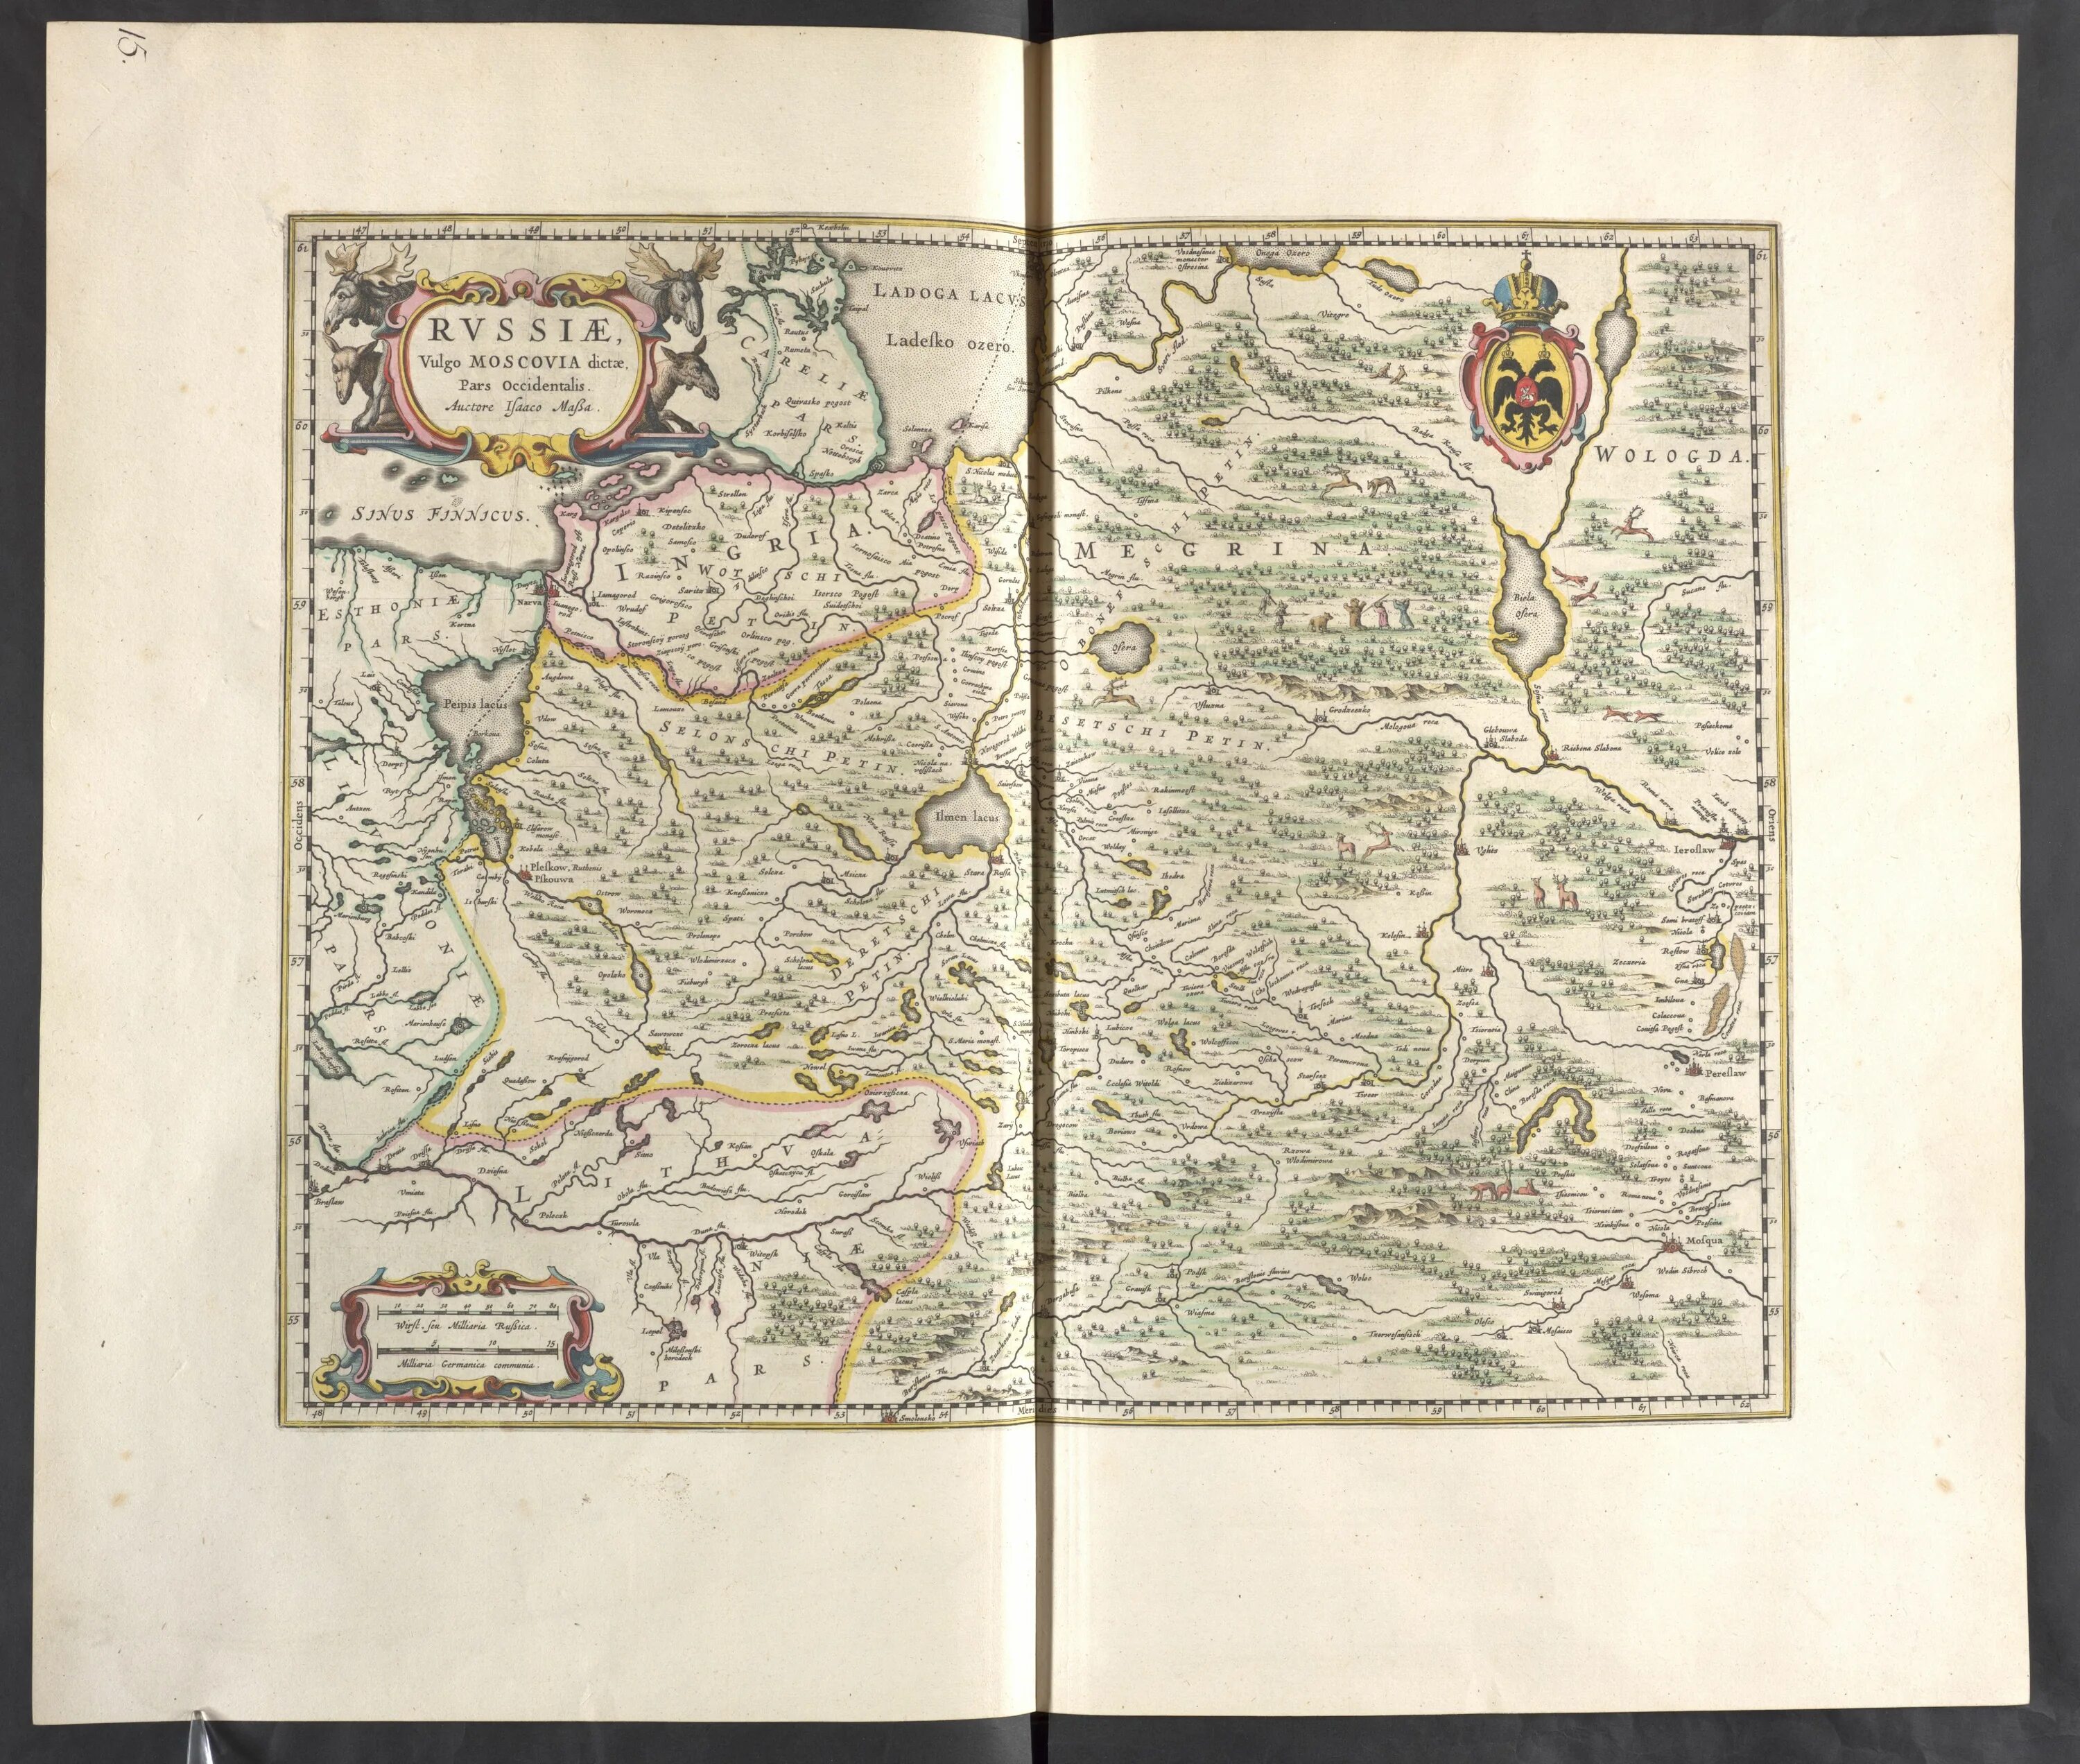 Антоний вид. [Moscovia] - Вильно, 1555 г. [Ефимов 1964]. Russiaæ vulgo Moscovia, Atlas maior, 1645.